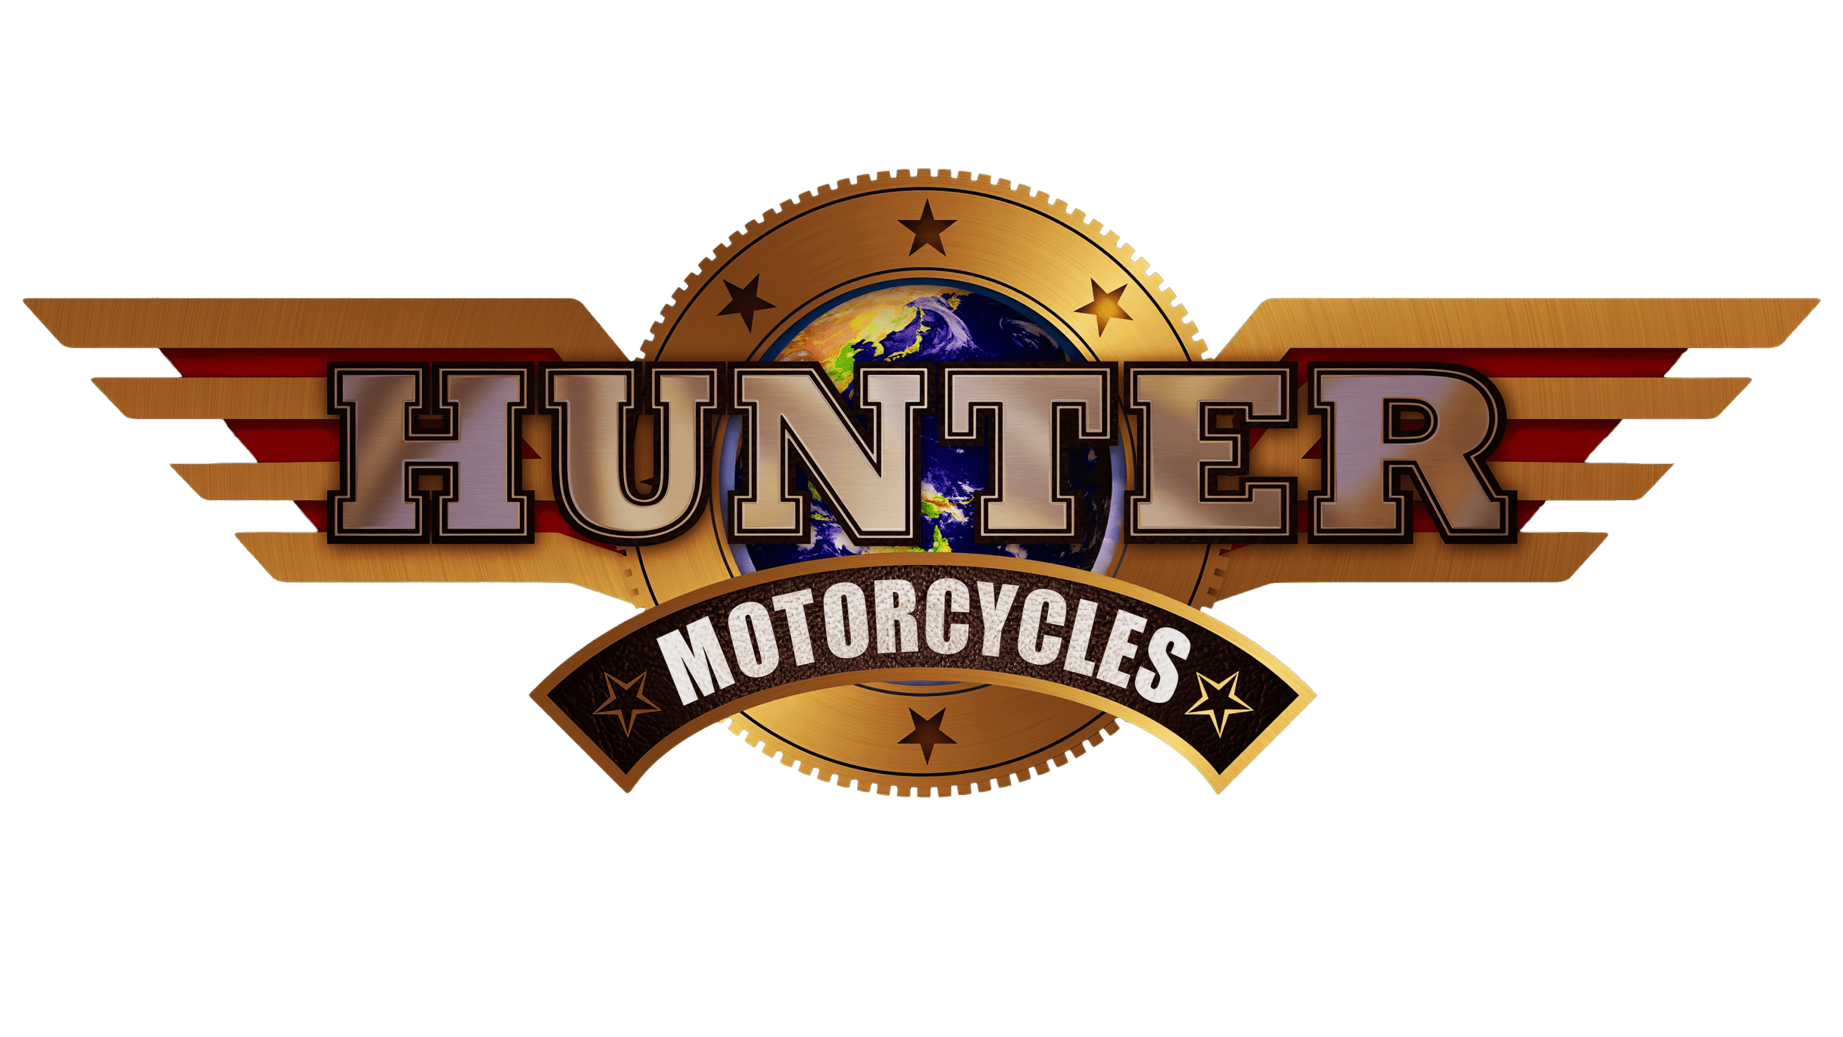 Hunter motorcycles sign